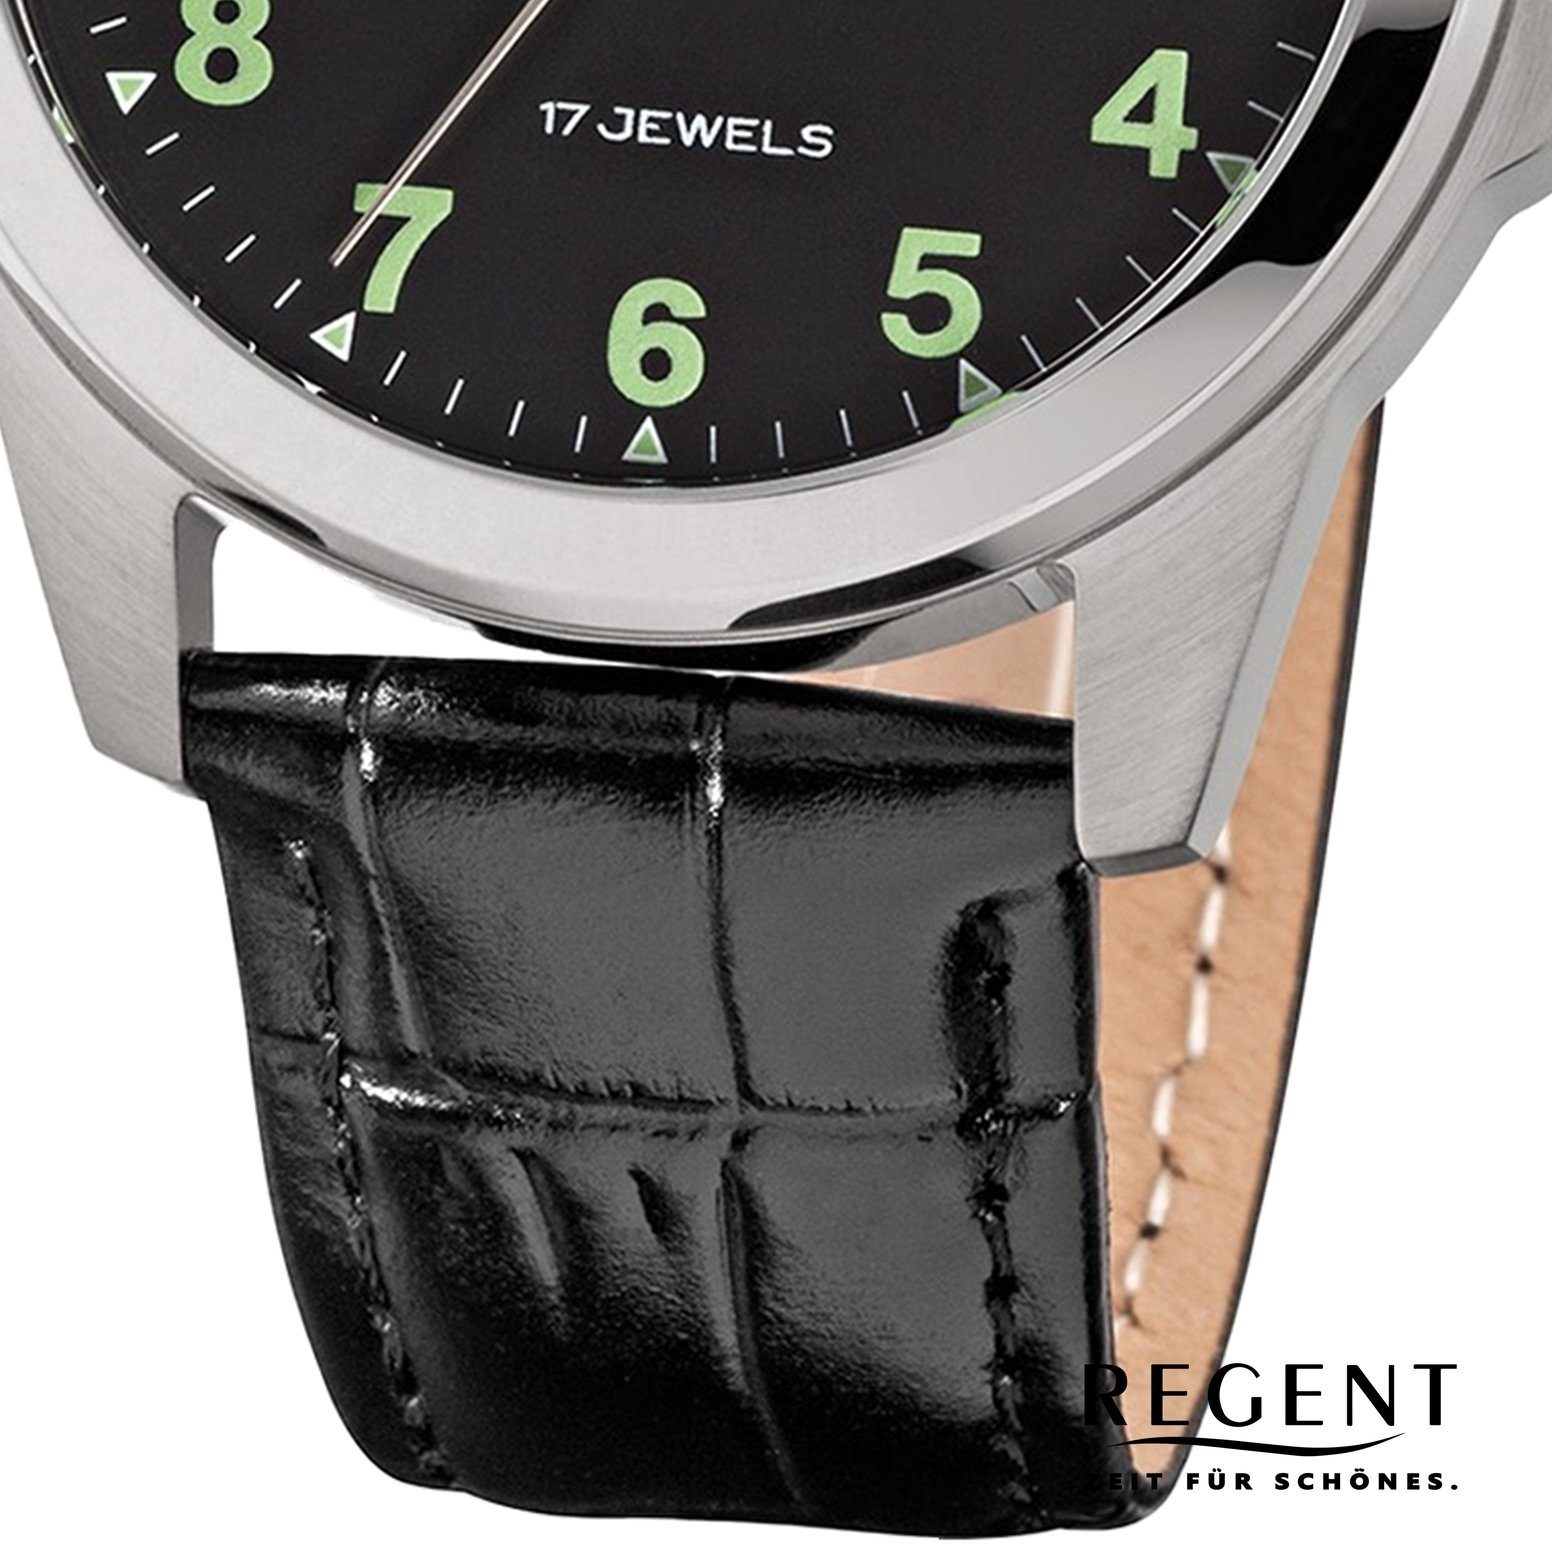 Regent Analog, extra Herren Quarzuhr Armbanduhr Regent Lederarmband groß 39mm), Armbanduhr rund, (ca. Herren